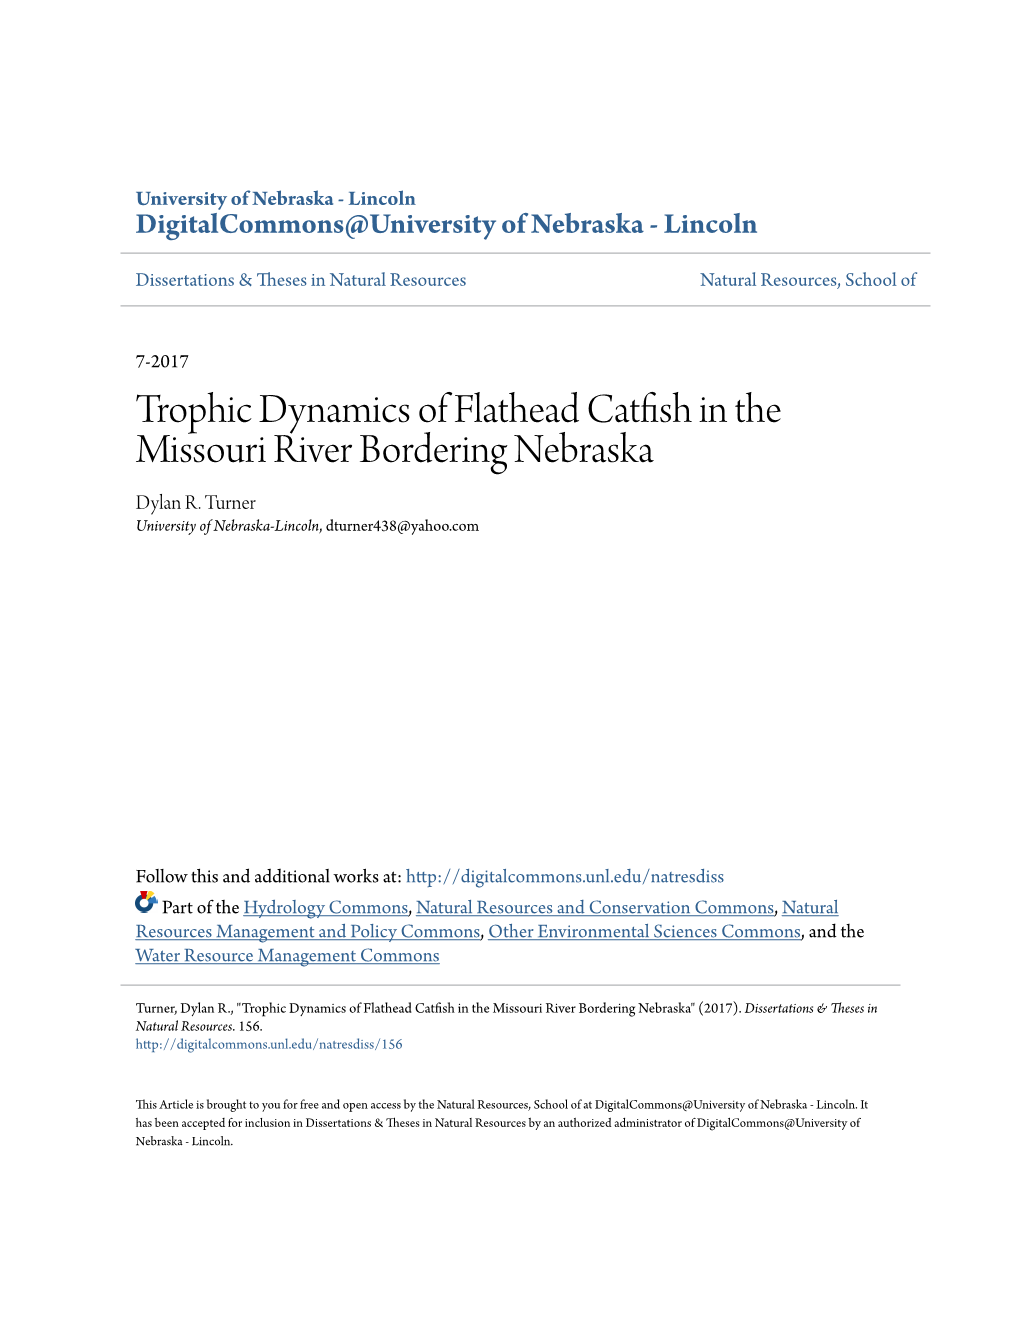 Trophic Dynamics of Flathead Catfish in the Missouri River Bordering Nebraska Dylan R